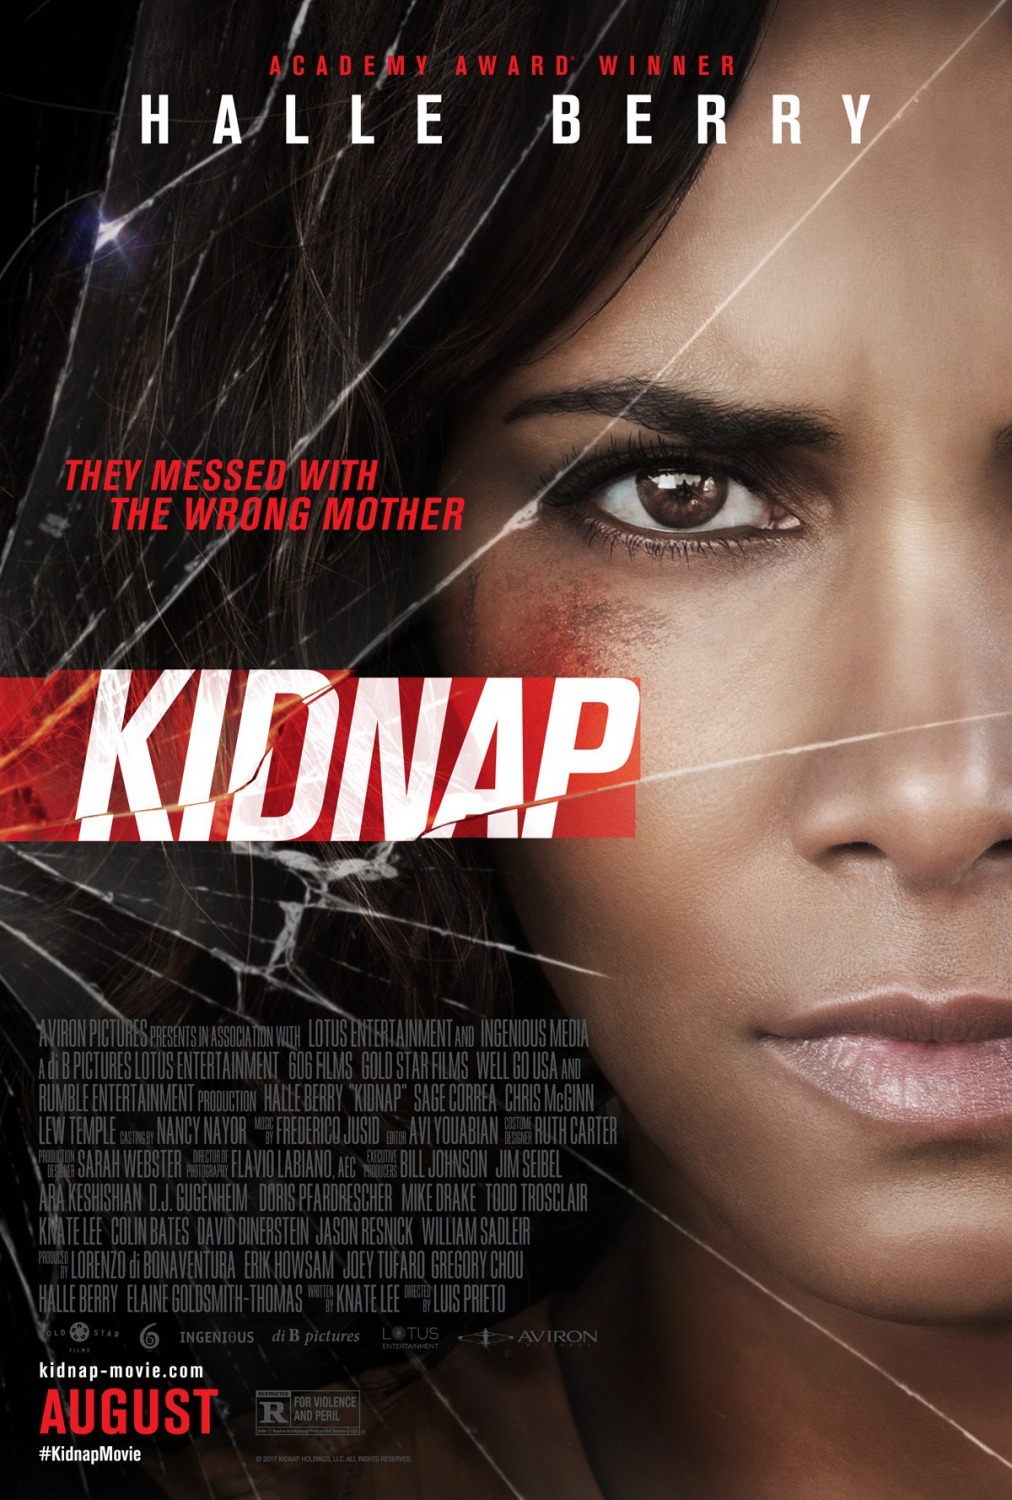 Nonton film Kidnap layarkaca21 indoxx1 ganool online streaming terbaru